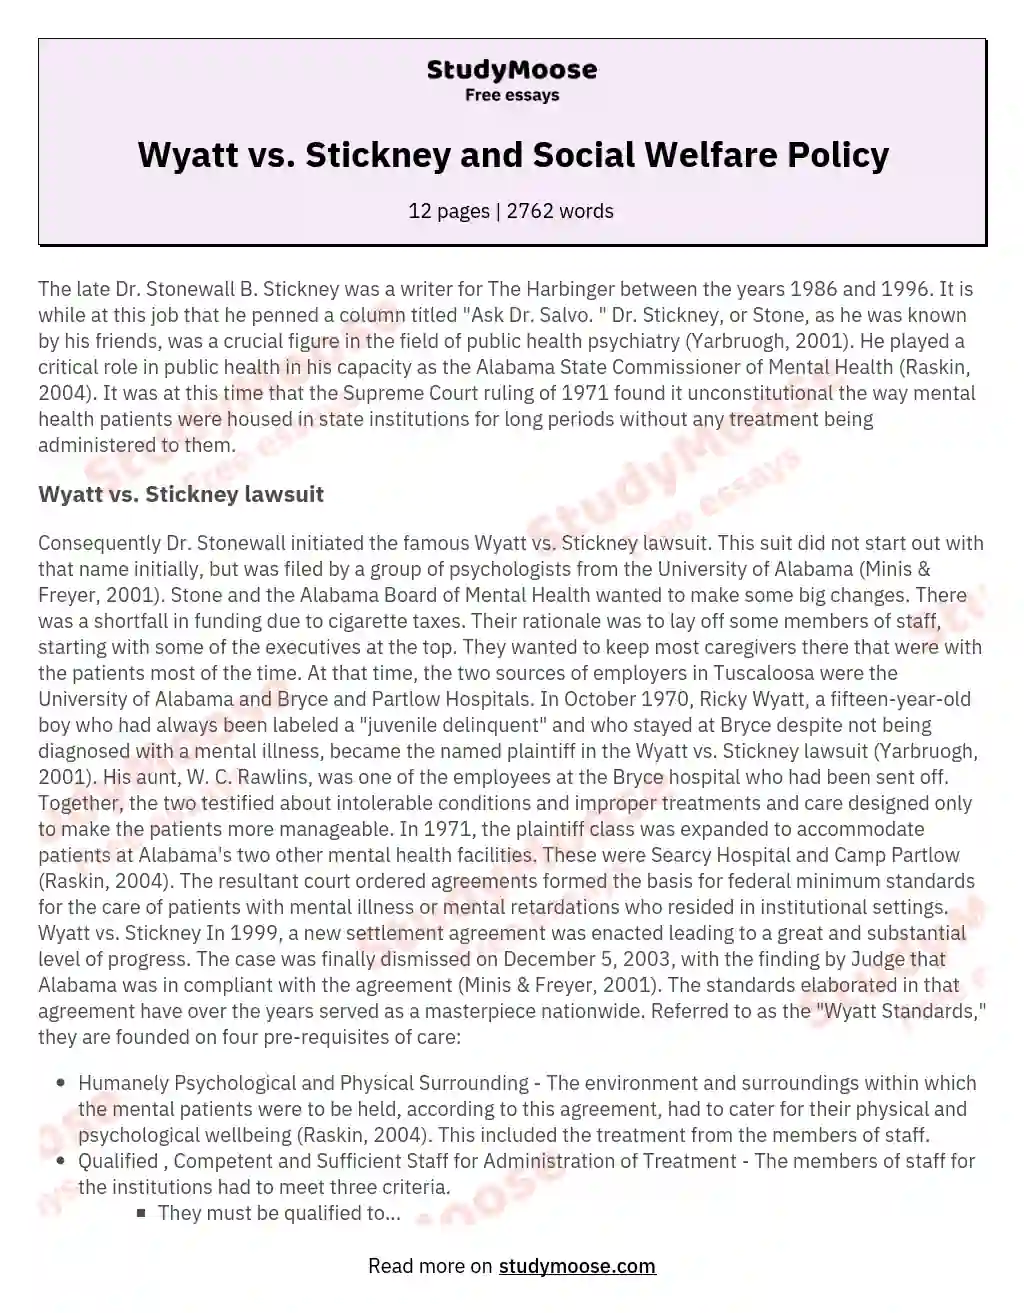 Wyatt vs. Stickney and Social Welfare Policy essay